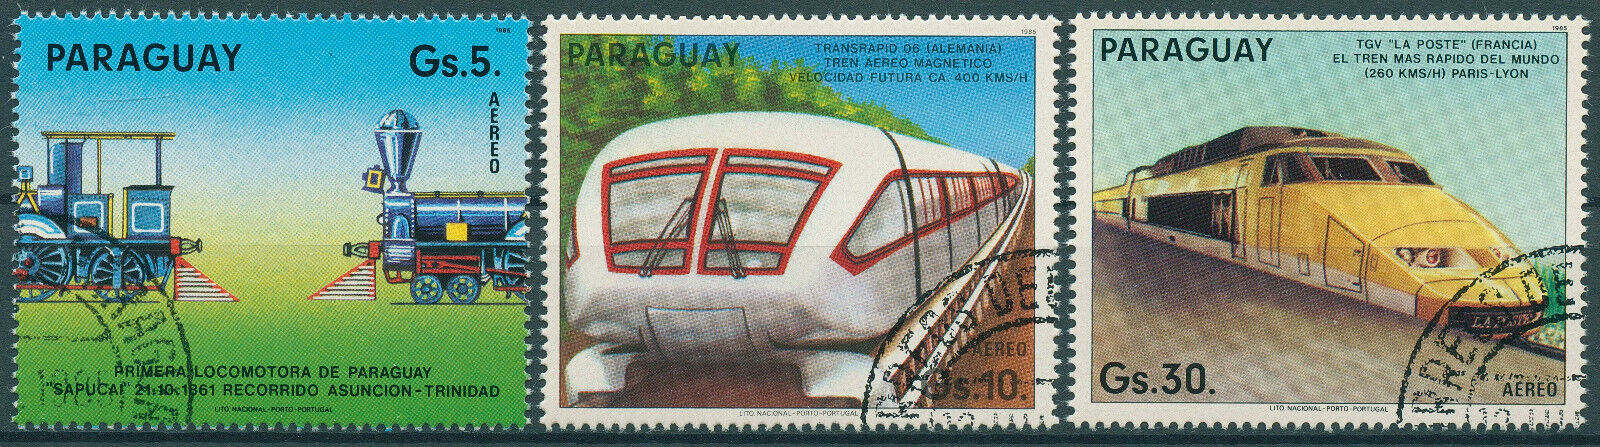 Paraguay 1985 CTO Railways Stamps High-Speed Trains Locomotives TGV 3v Set